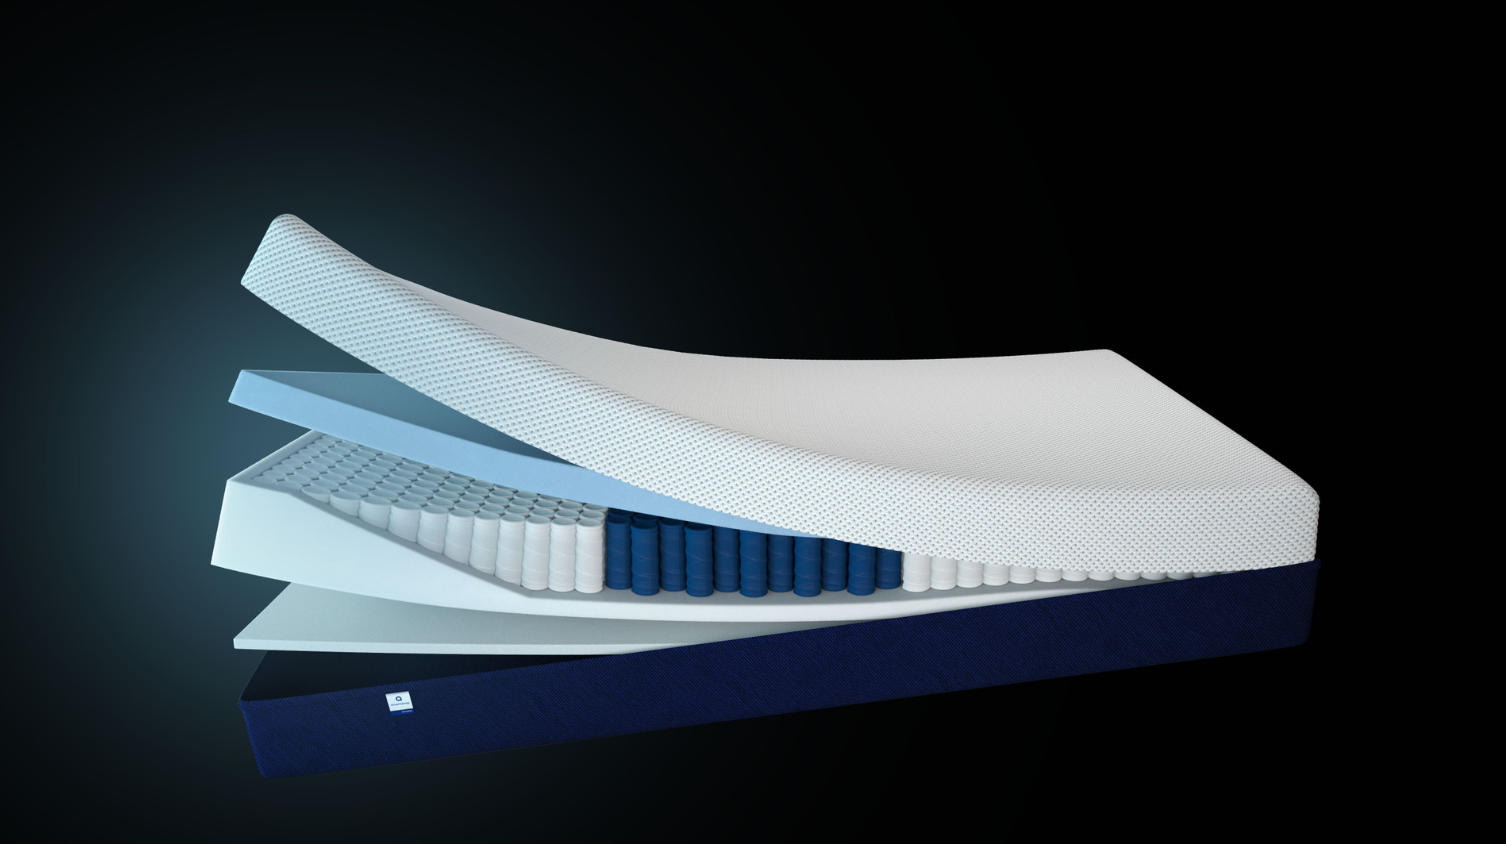 Amerisleep AS3 mattress review - hybrid construction and design